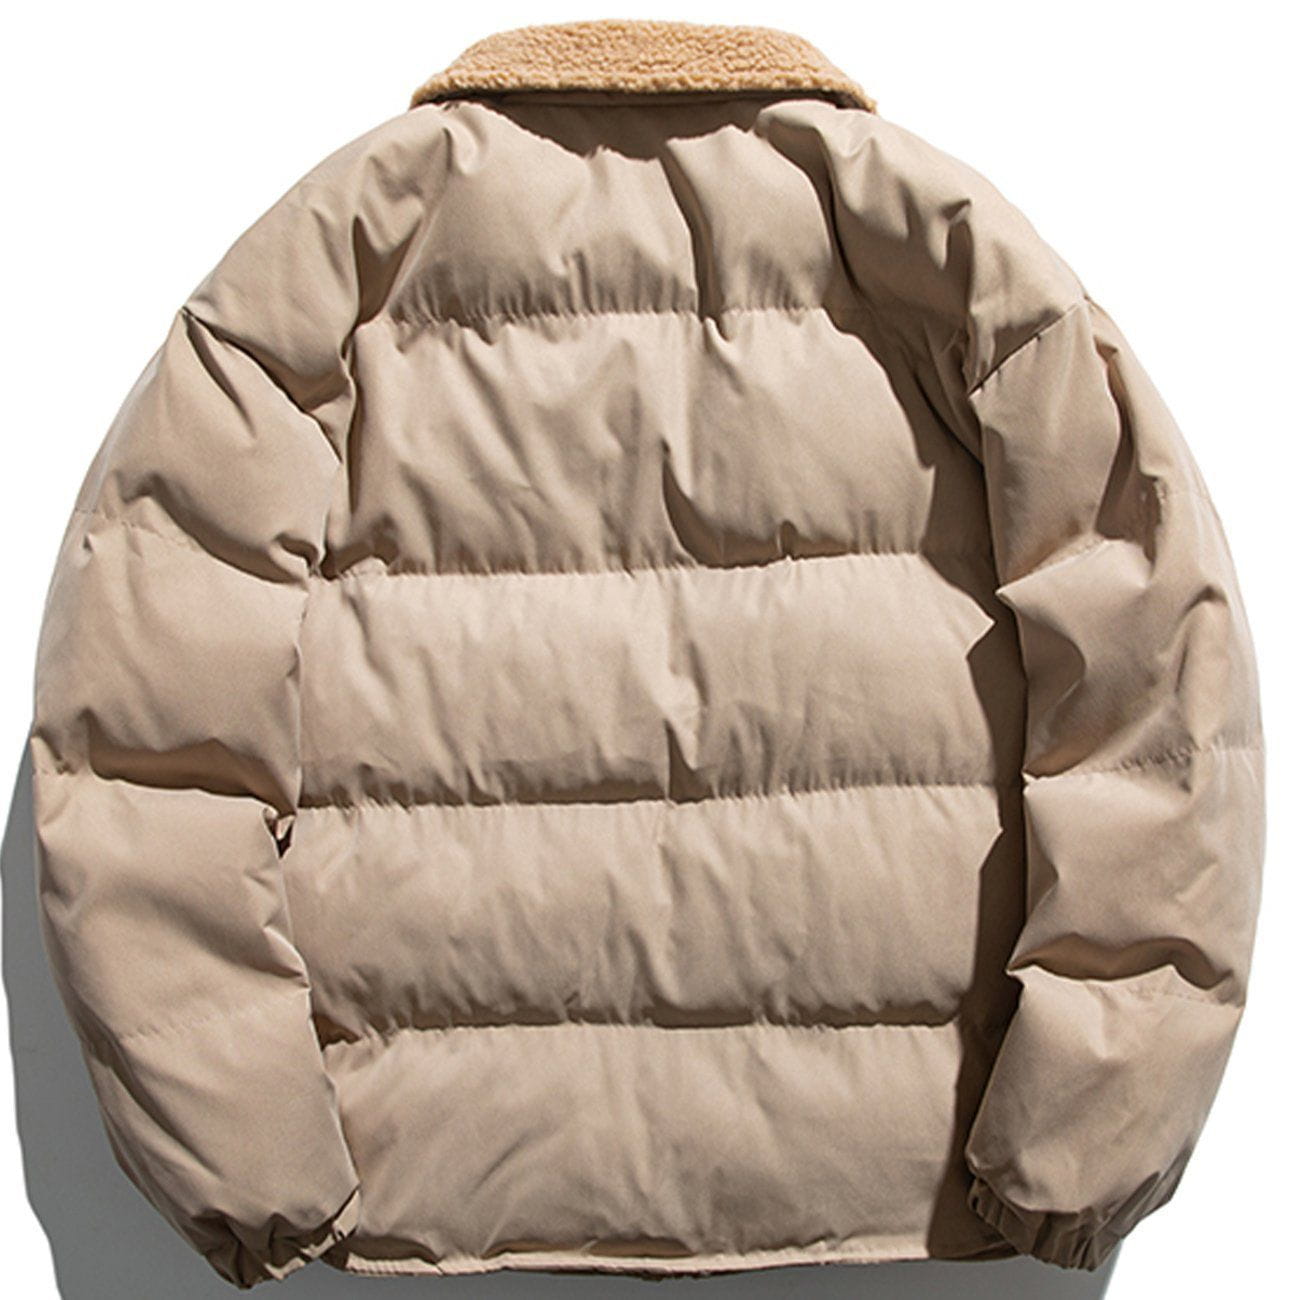 Majesda® - Pocket Solid Winter Coat outfit ideas streetwear fashion